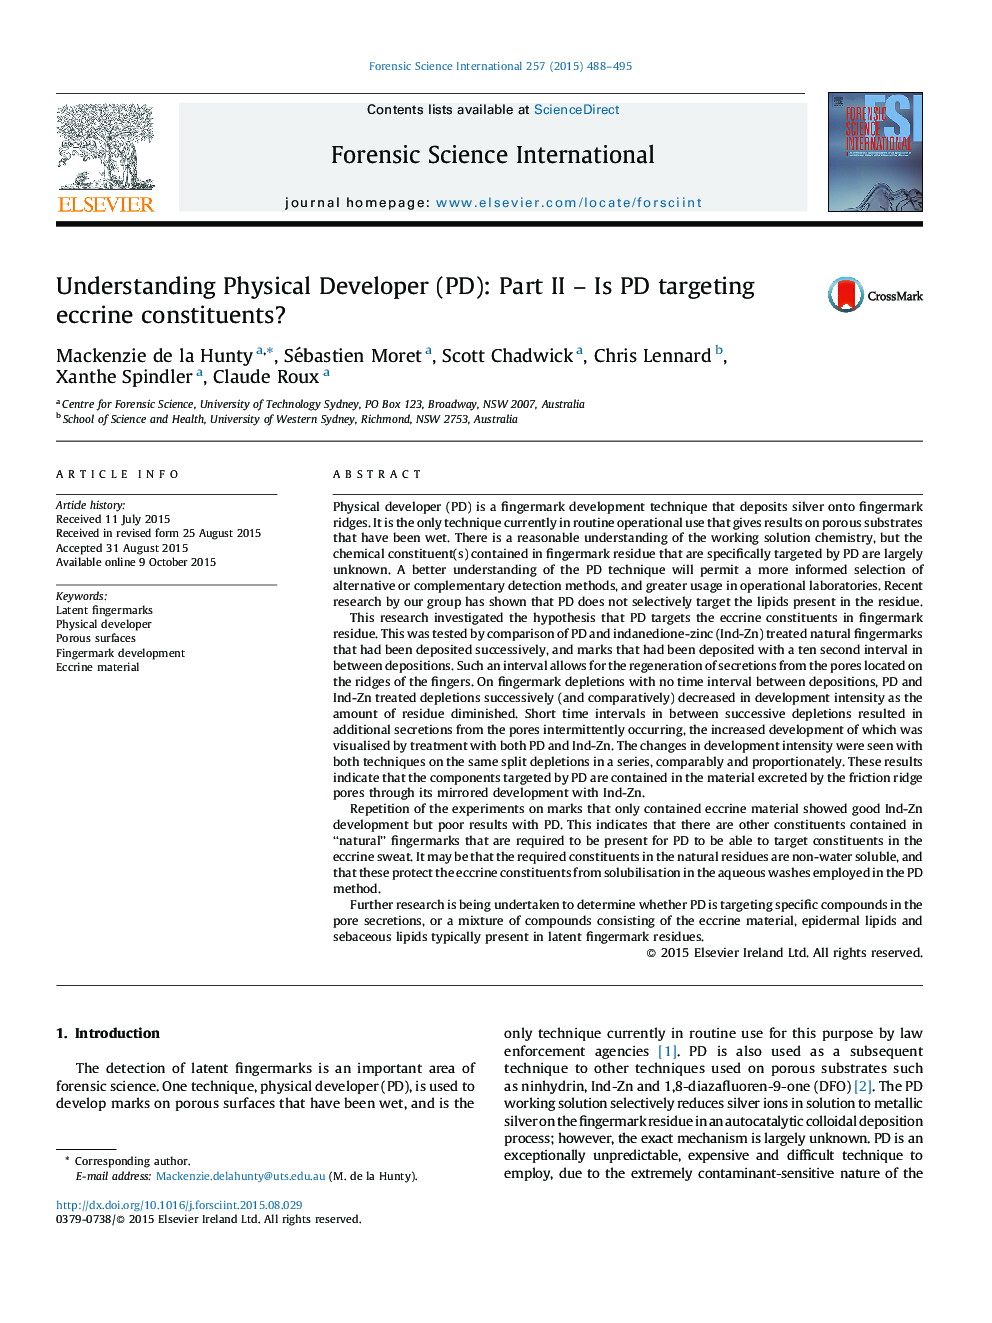 Understanding Physical Developer (PD): Part II - Is PD targeting eccrine constituents?